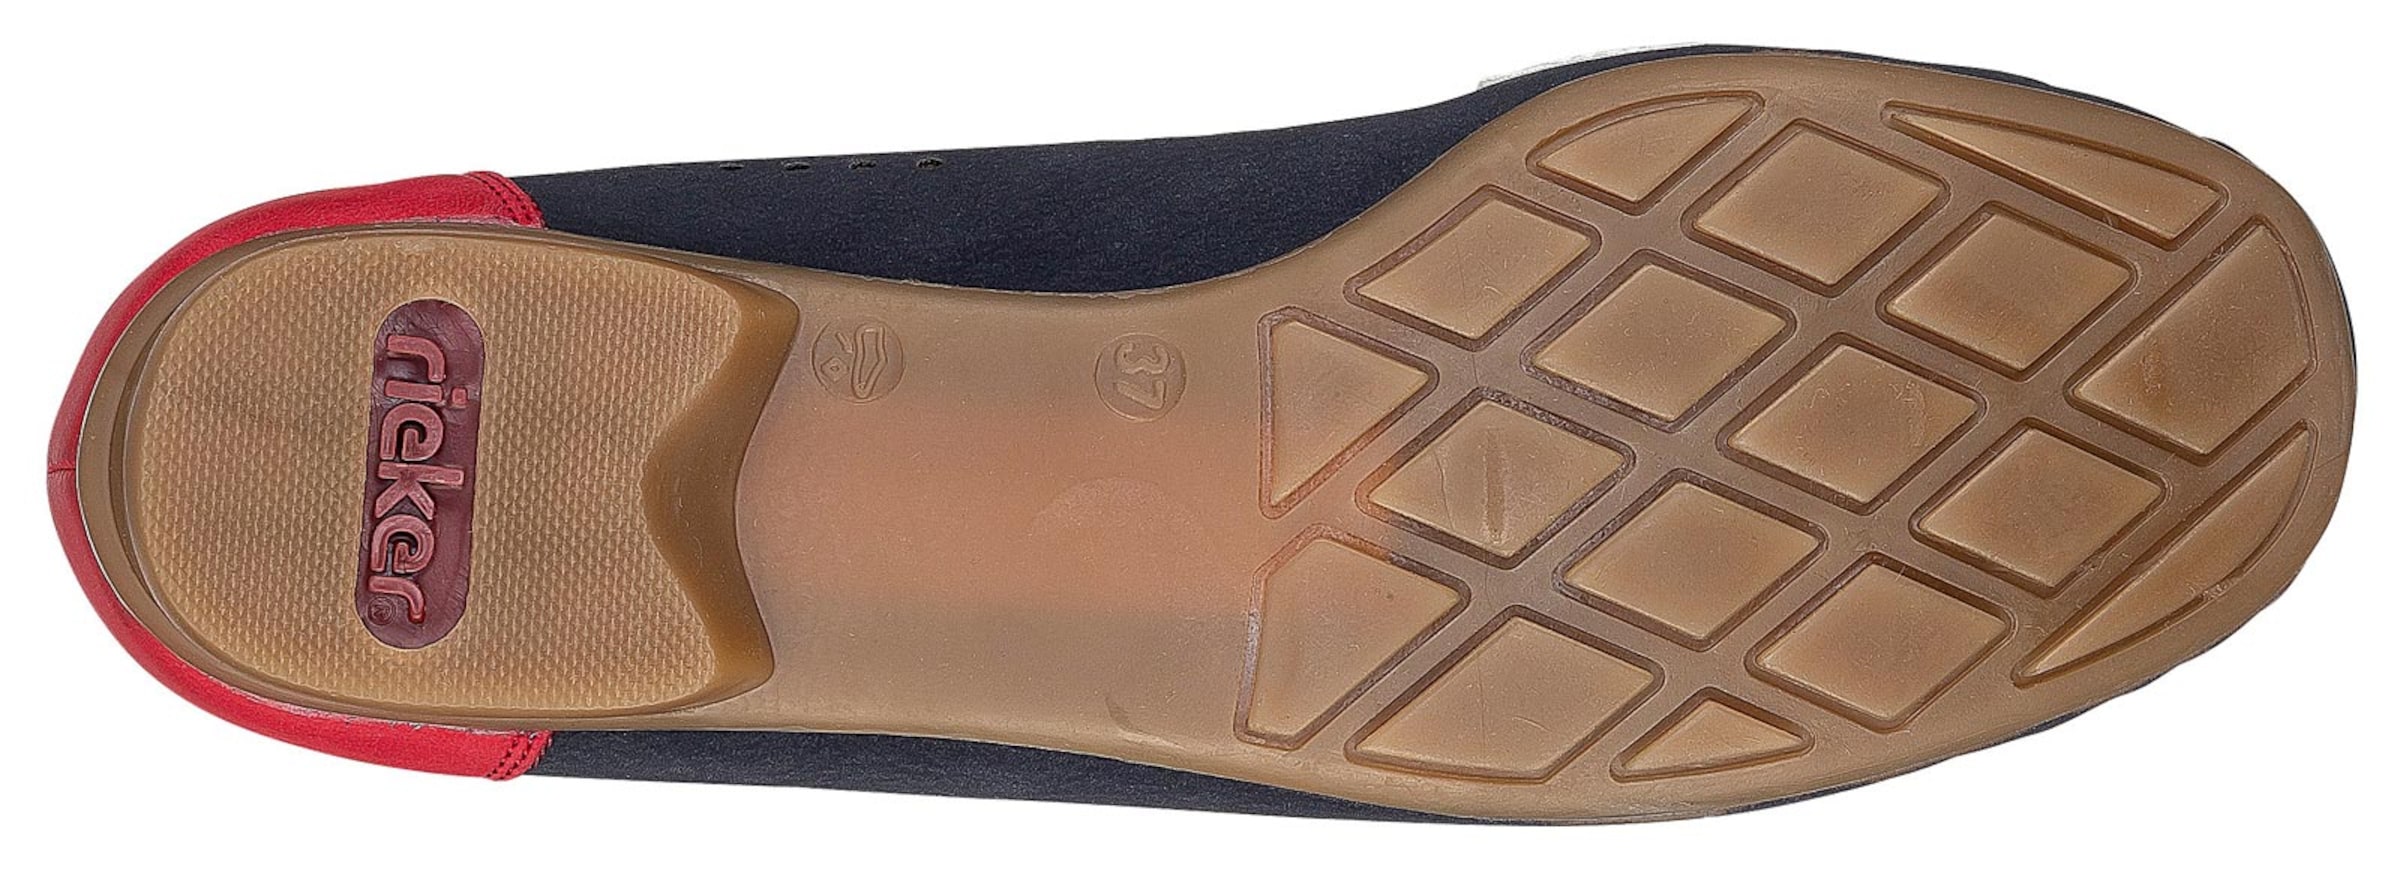 Schuhe Mokassins & Slippers Rieker Slipper in dunkelblau-rot-weiß 